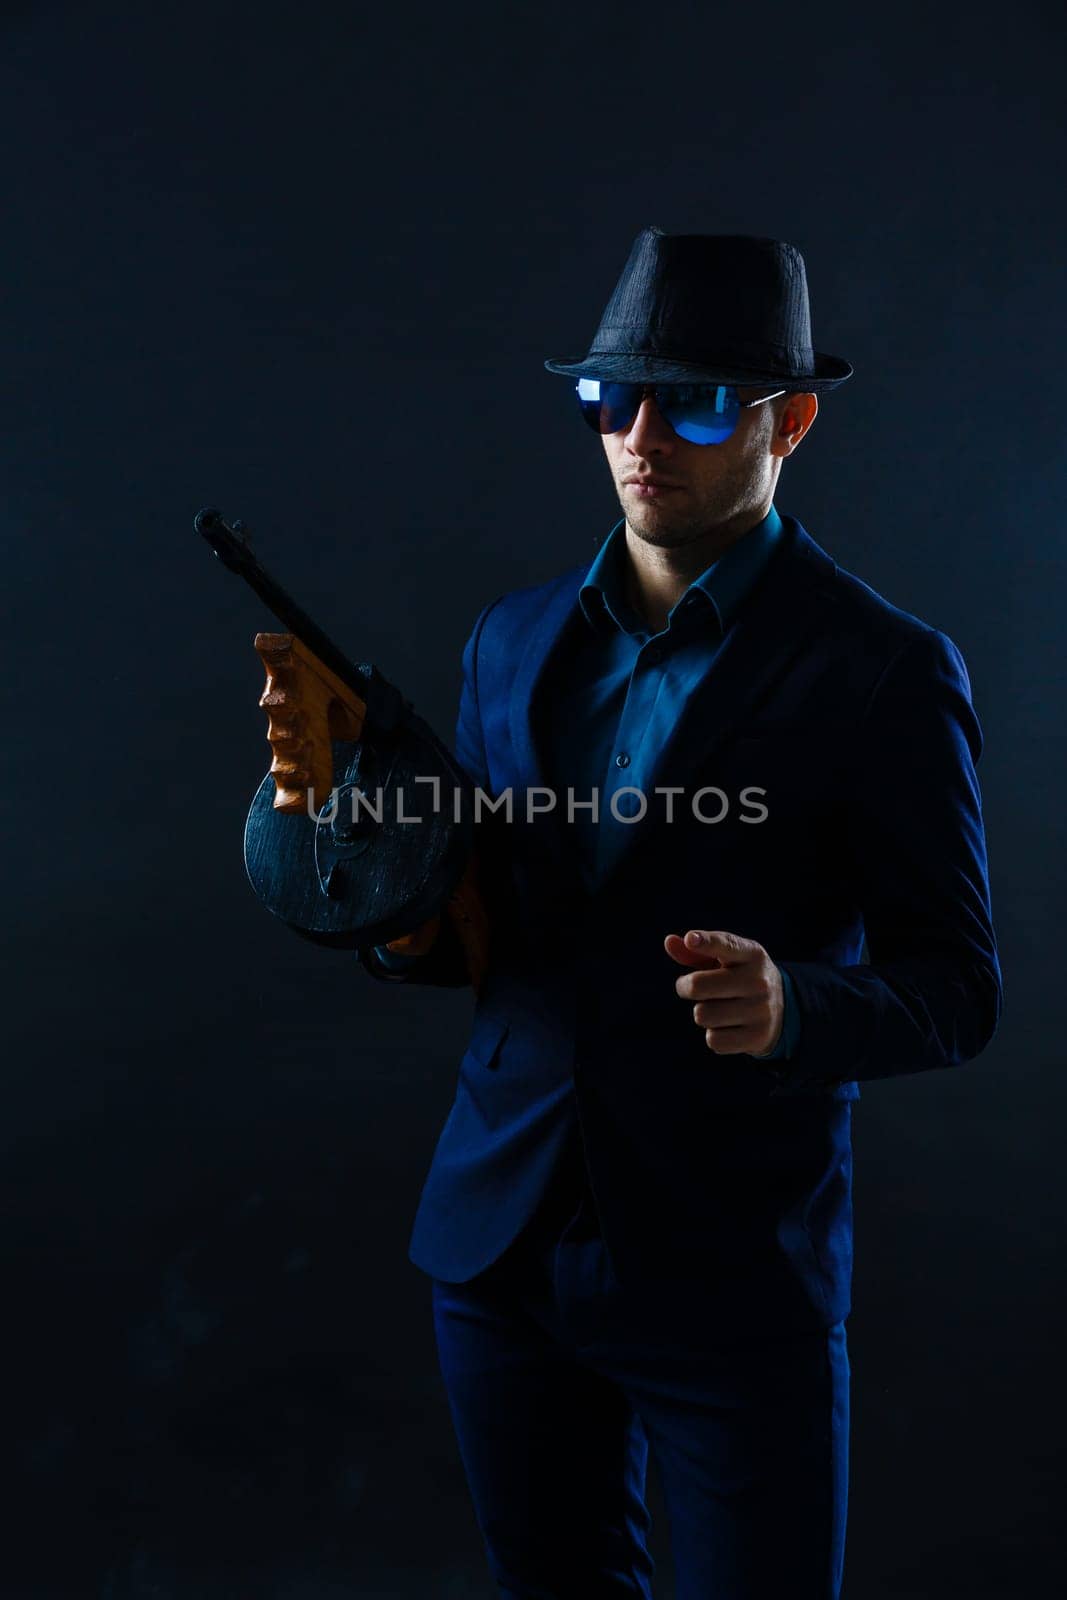 Mature Business Man Holding Gun on a dark background.